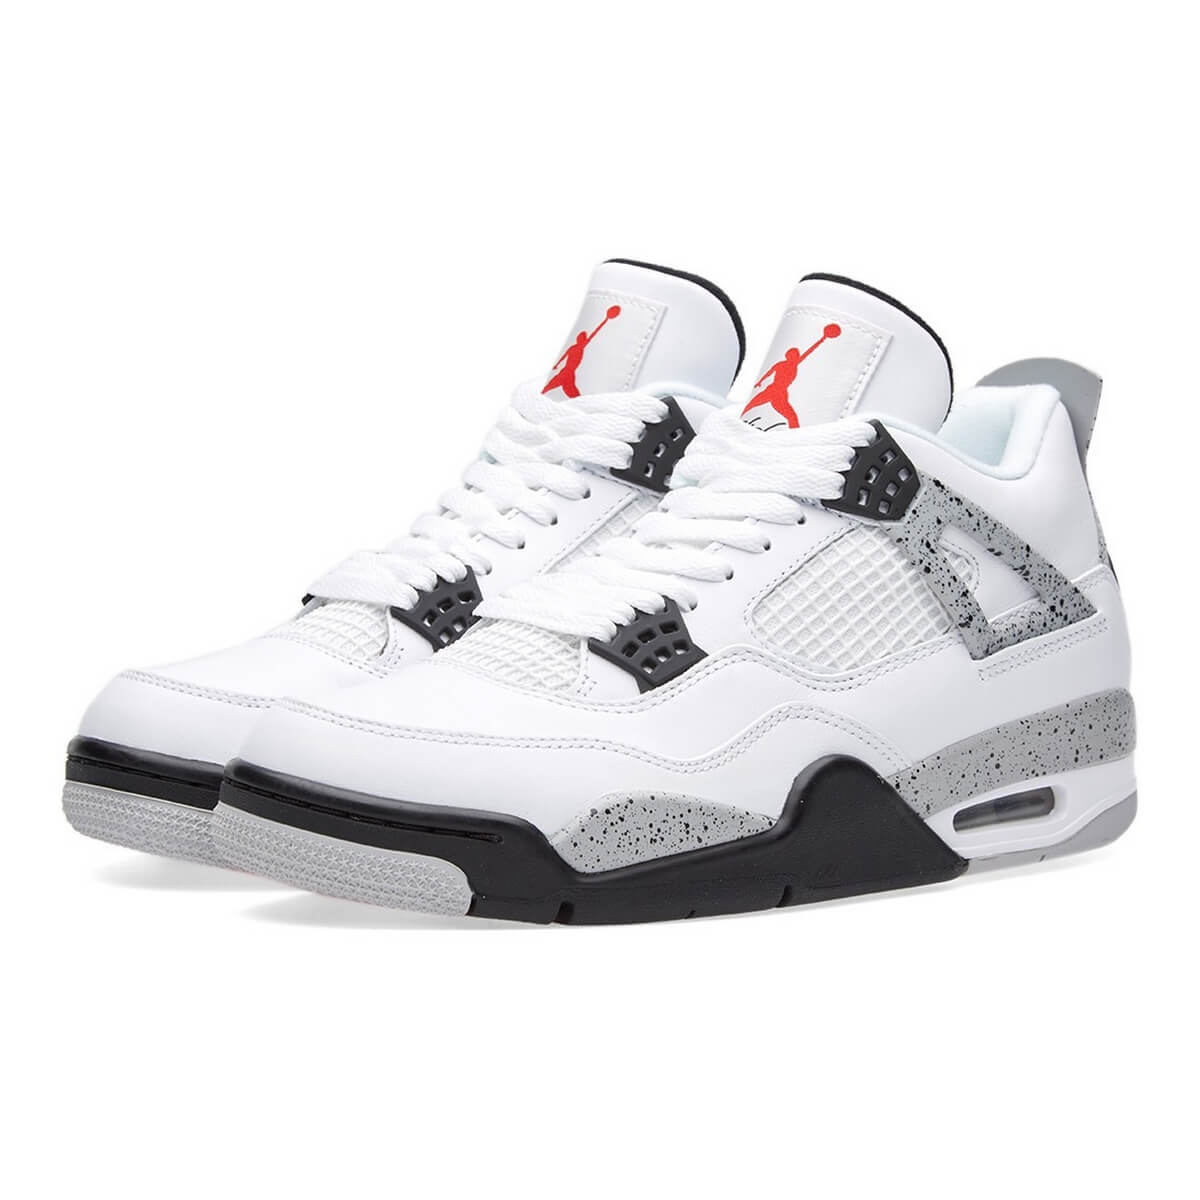 Nike Jordan 4 White Oreo - Air Jordan 4 "White Oreo" CT8527-100 Release